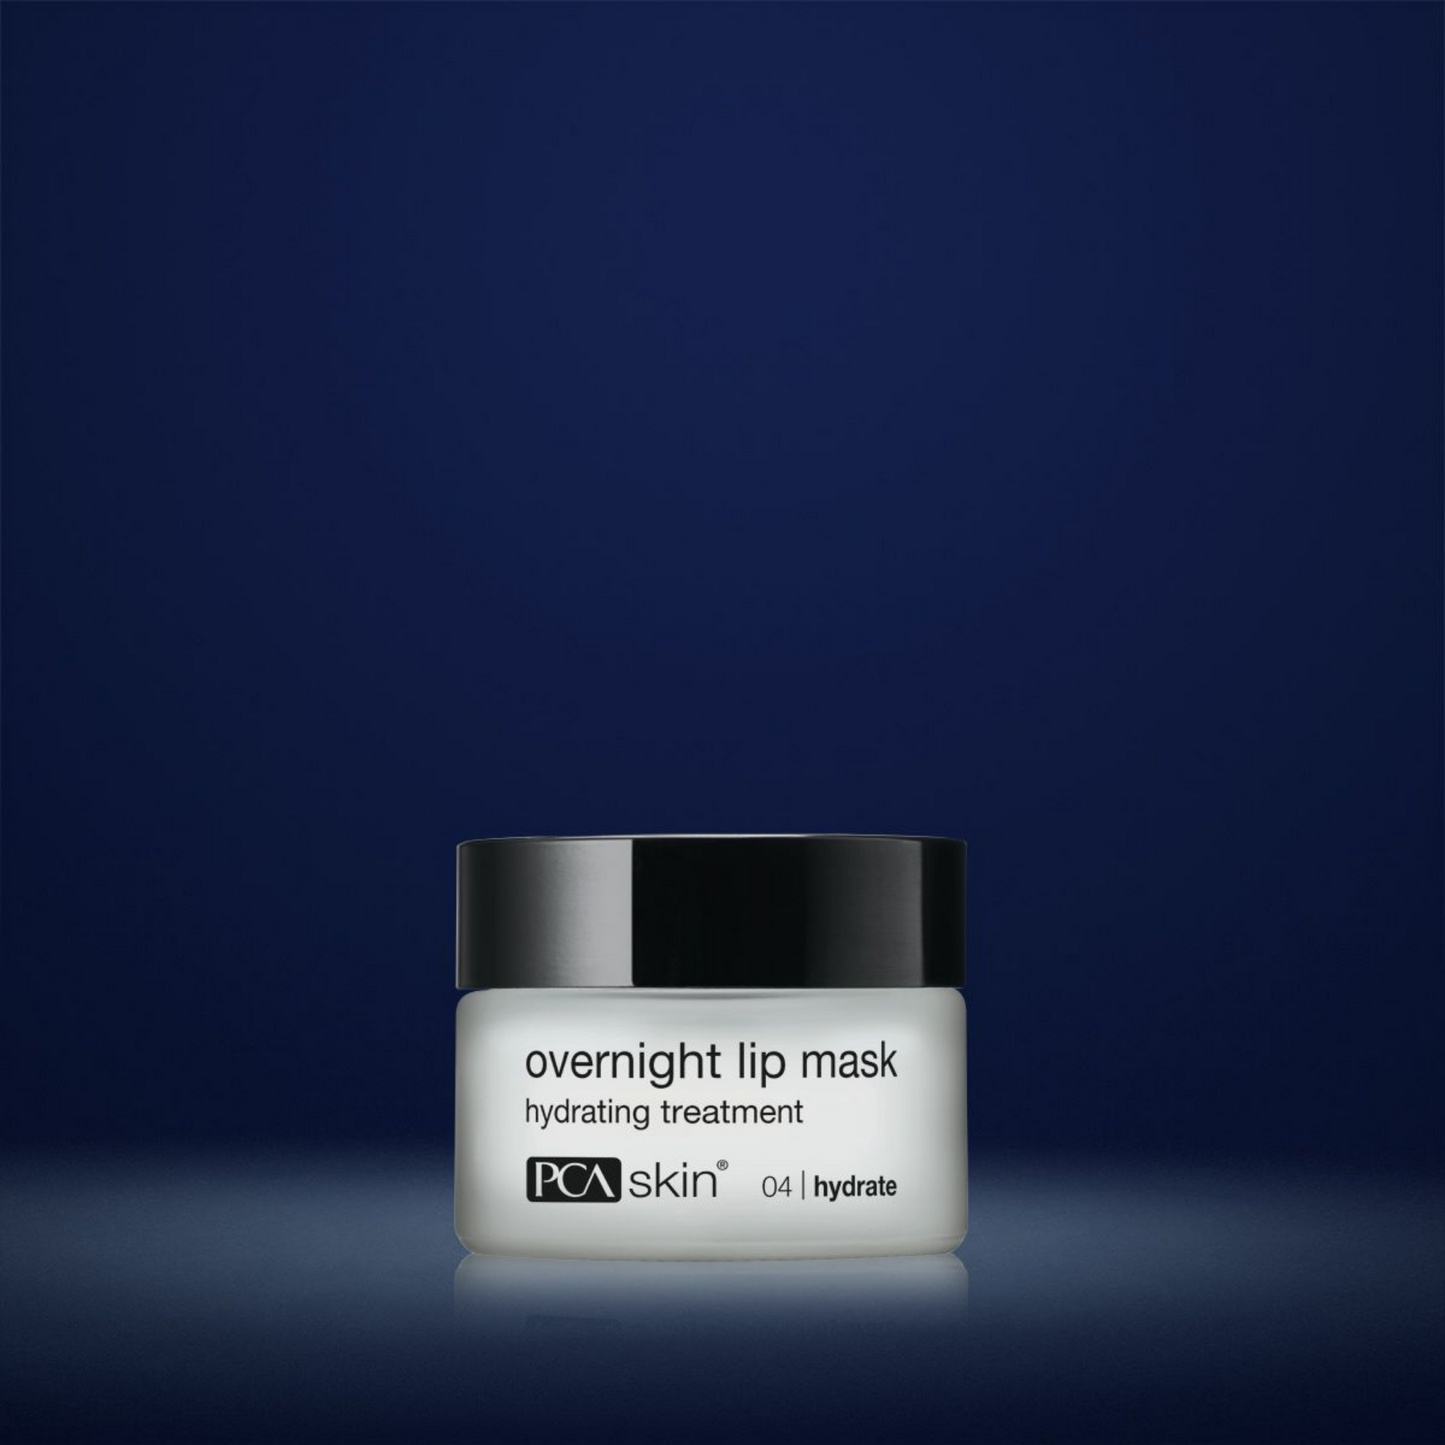 Overnight Lip Mask | PCA Skin